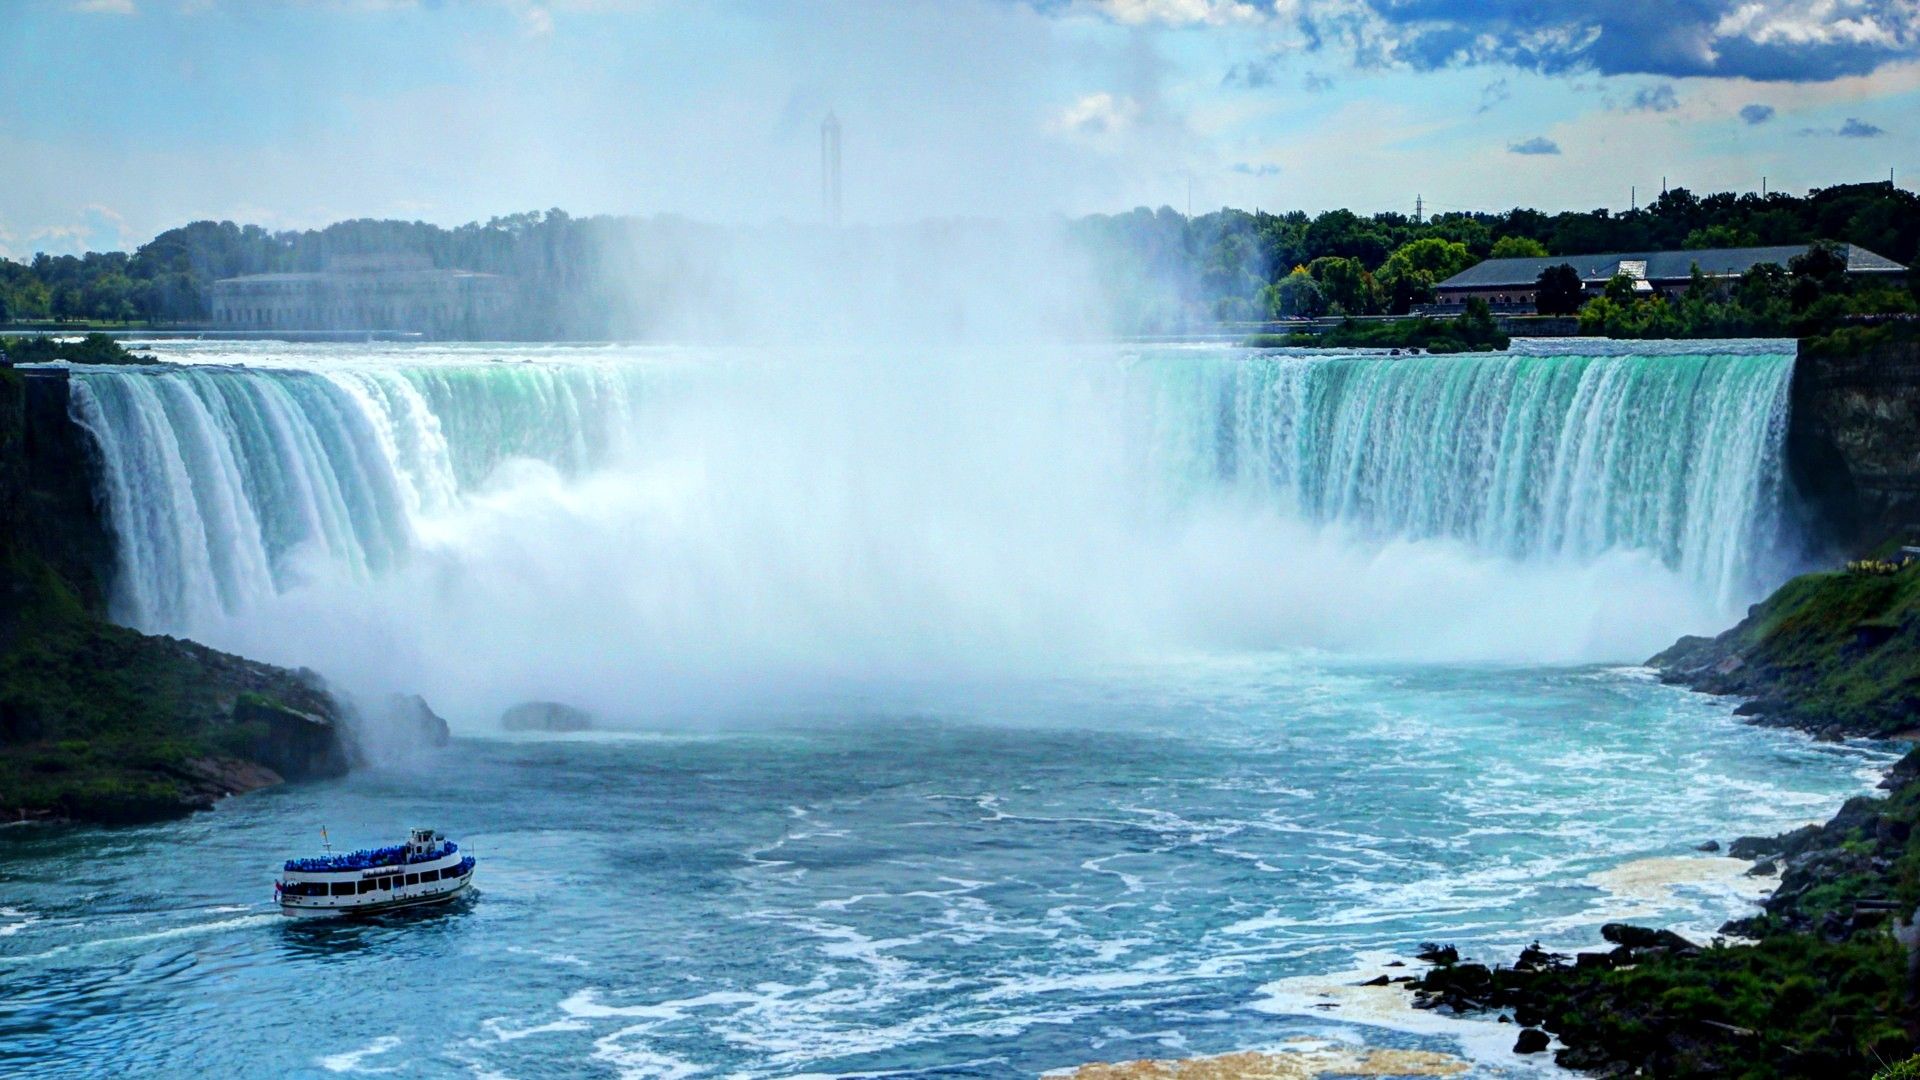 Niagara Falls (Canadian Side) i Niagara Falls, ON | Places to ...